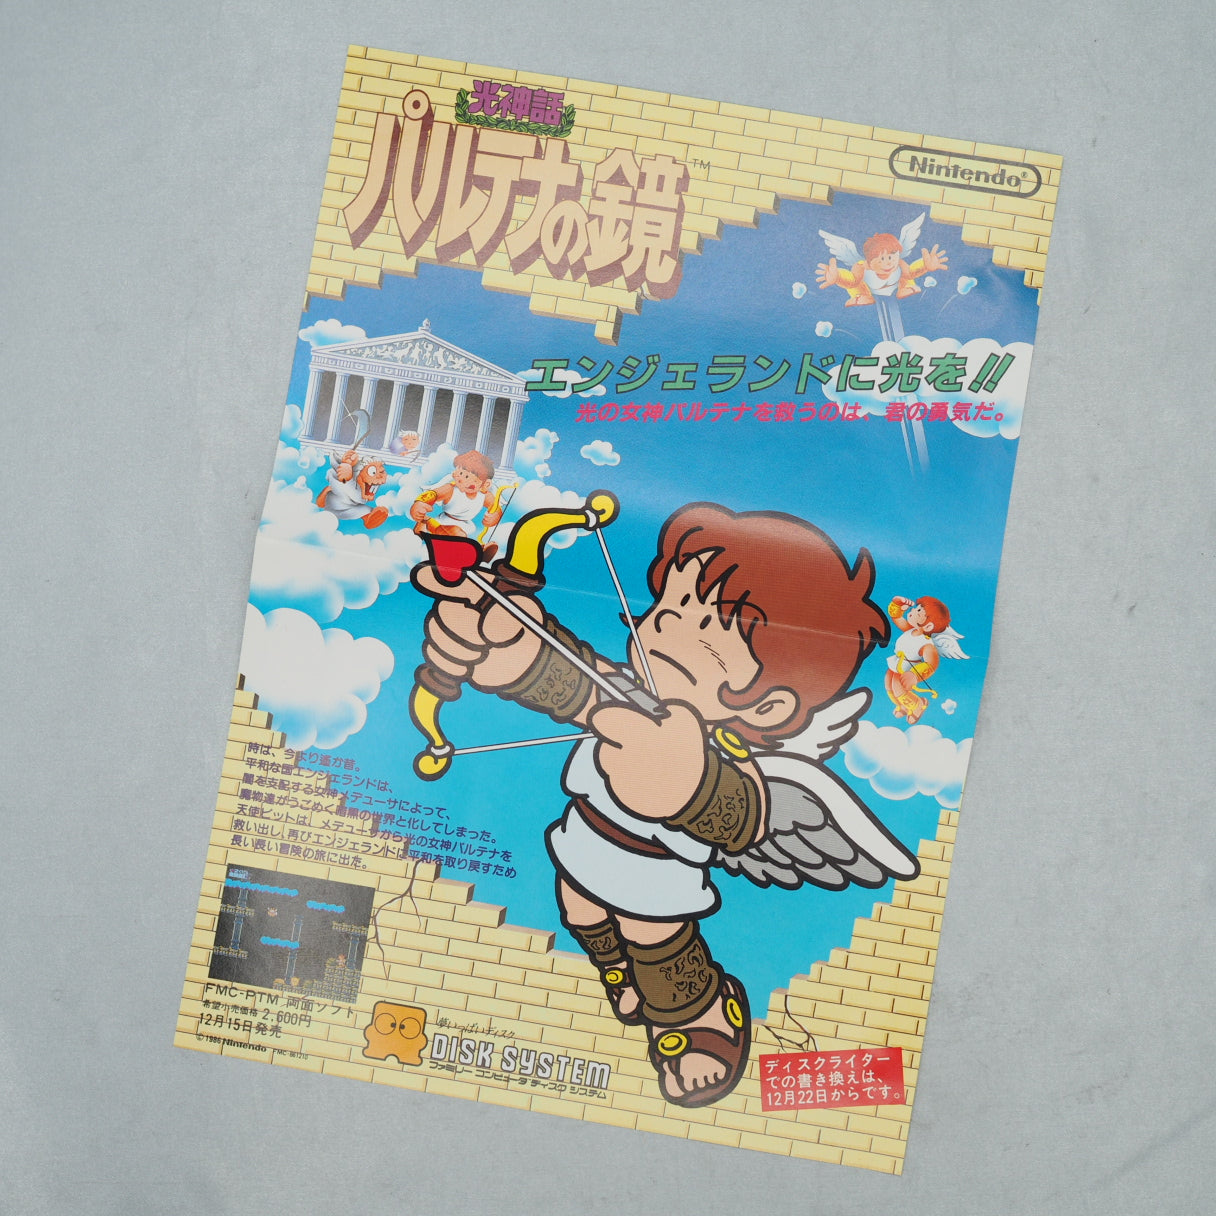 PALTENA NO KAGAMI Nintendo Famicom disk Catalog Flyer Leaflet Paper Poster